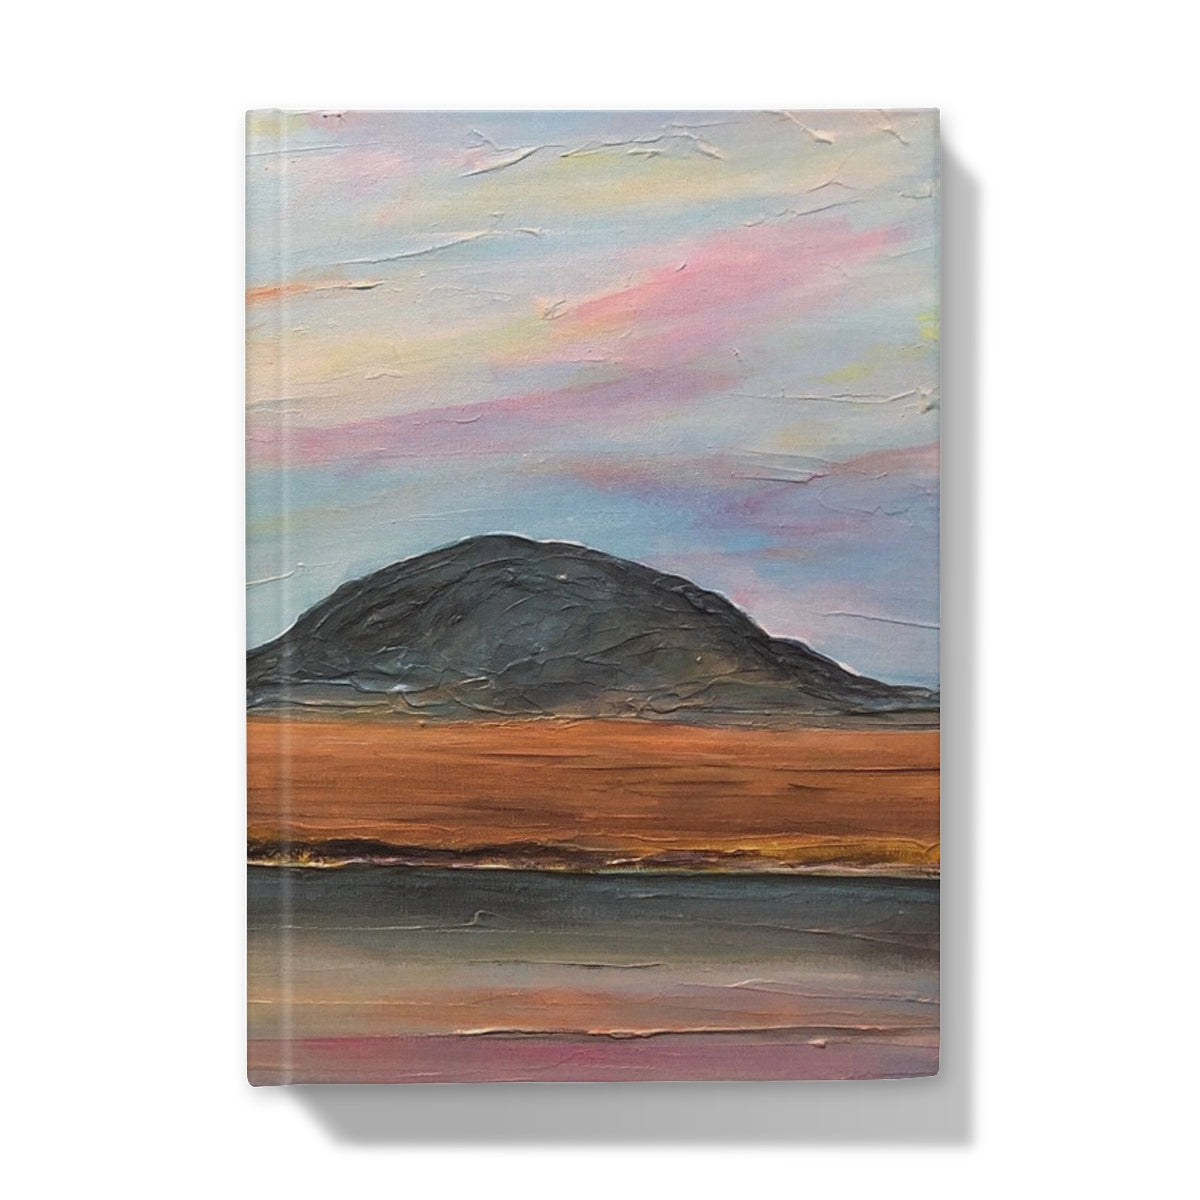 Jura Dawn Art Gifts Hardback Journal-Journals & Notebooks-Hebridean Islands Art Gallery-5"x7"-Plain-Paintings, Prints, Homeware, Art Gifts From Scotland By Scottish Artist Kevin Hunter